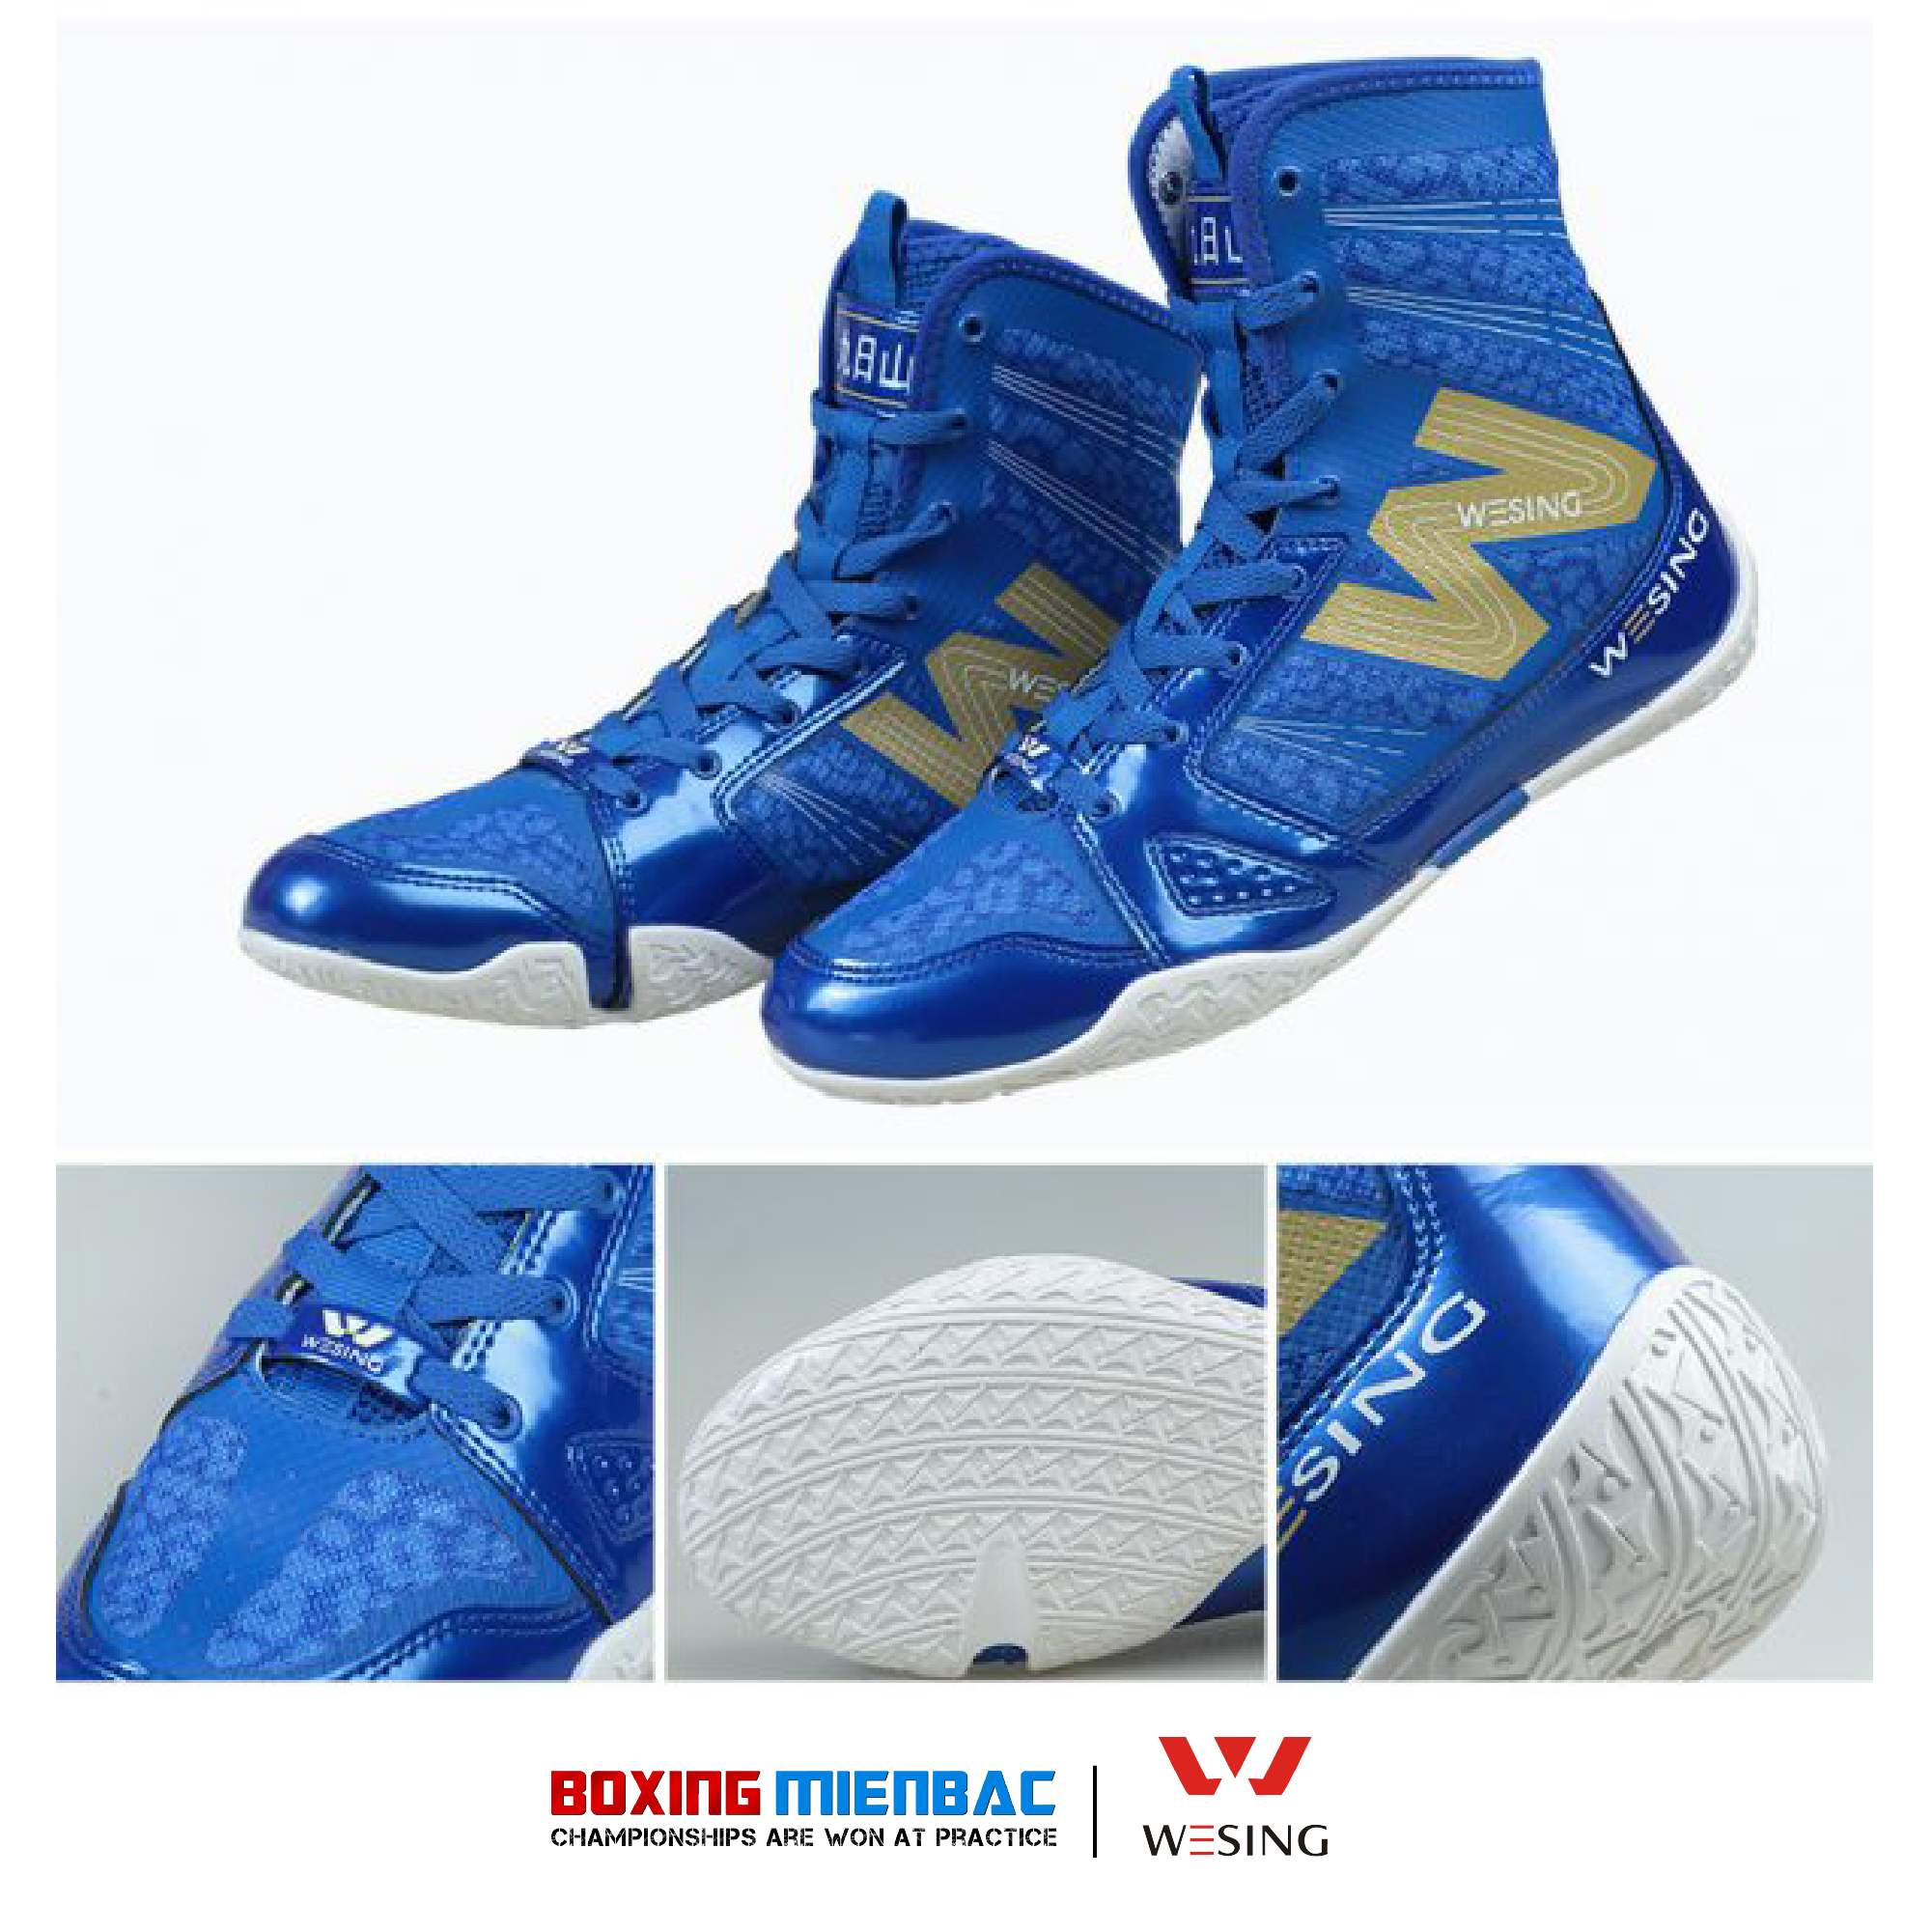 Giày Boxing Wesing - Boxing Shoes Wesing/ Màu Xanh